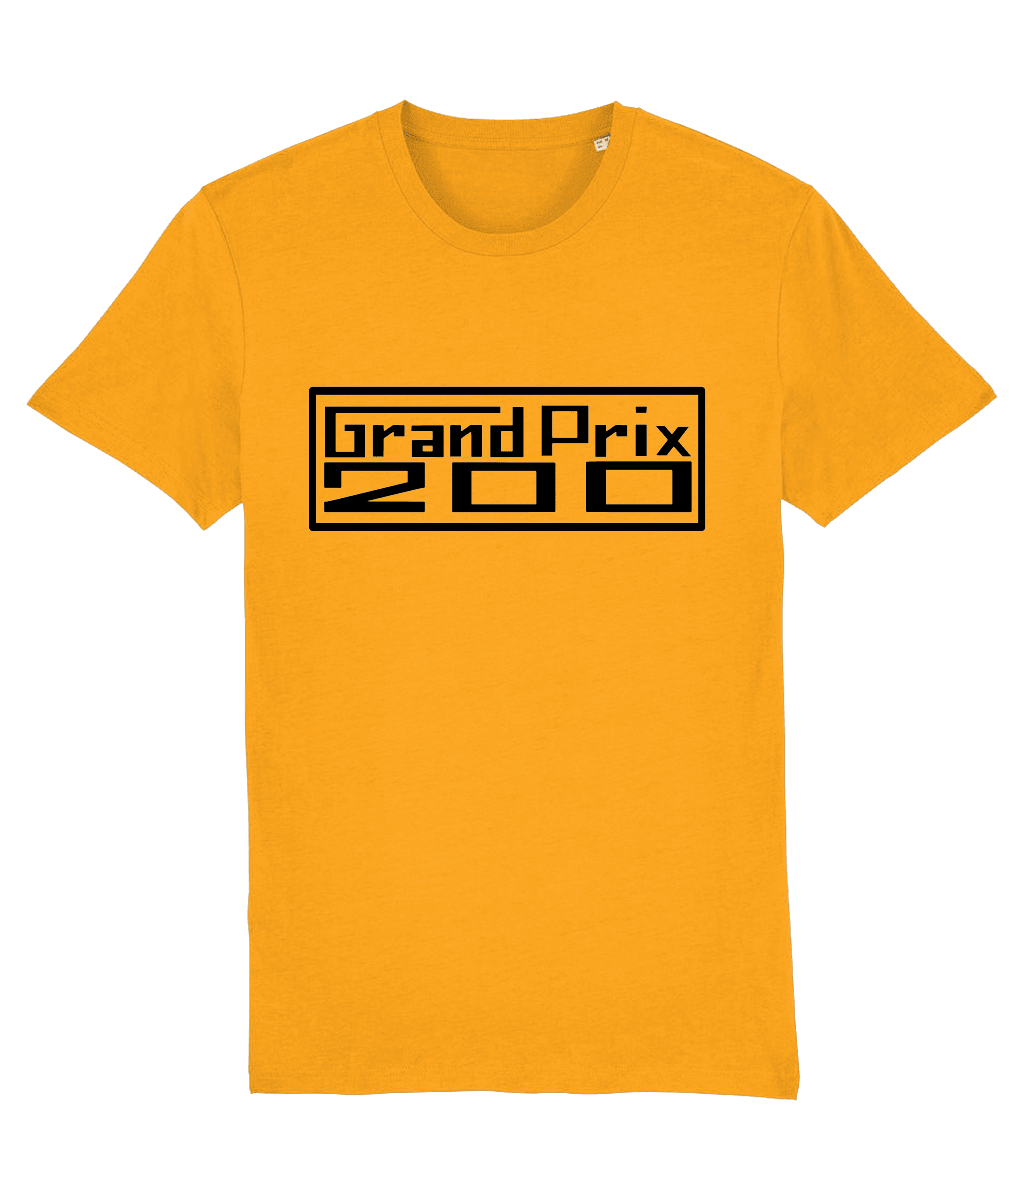 GRAND PRIX 200: T-Shirt Inspired by Classic Lambretta Scooters (5 Lambretta Colour Options) Small to 3XL - SOUND IS COLOUR